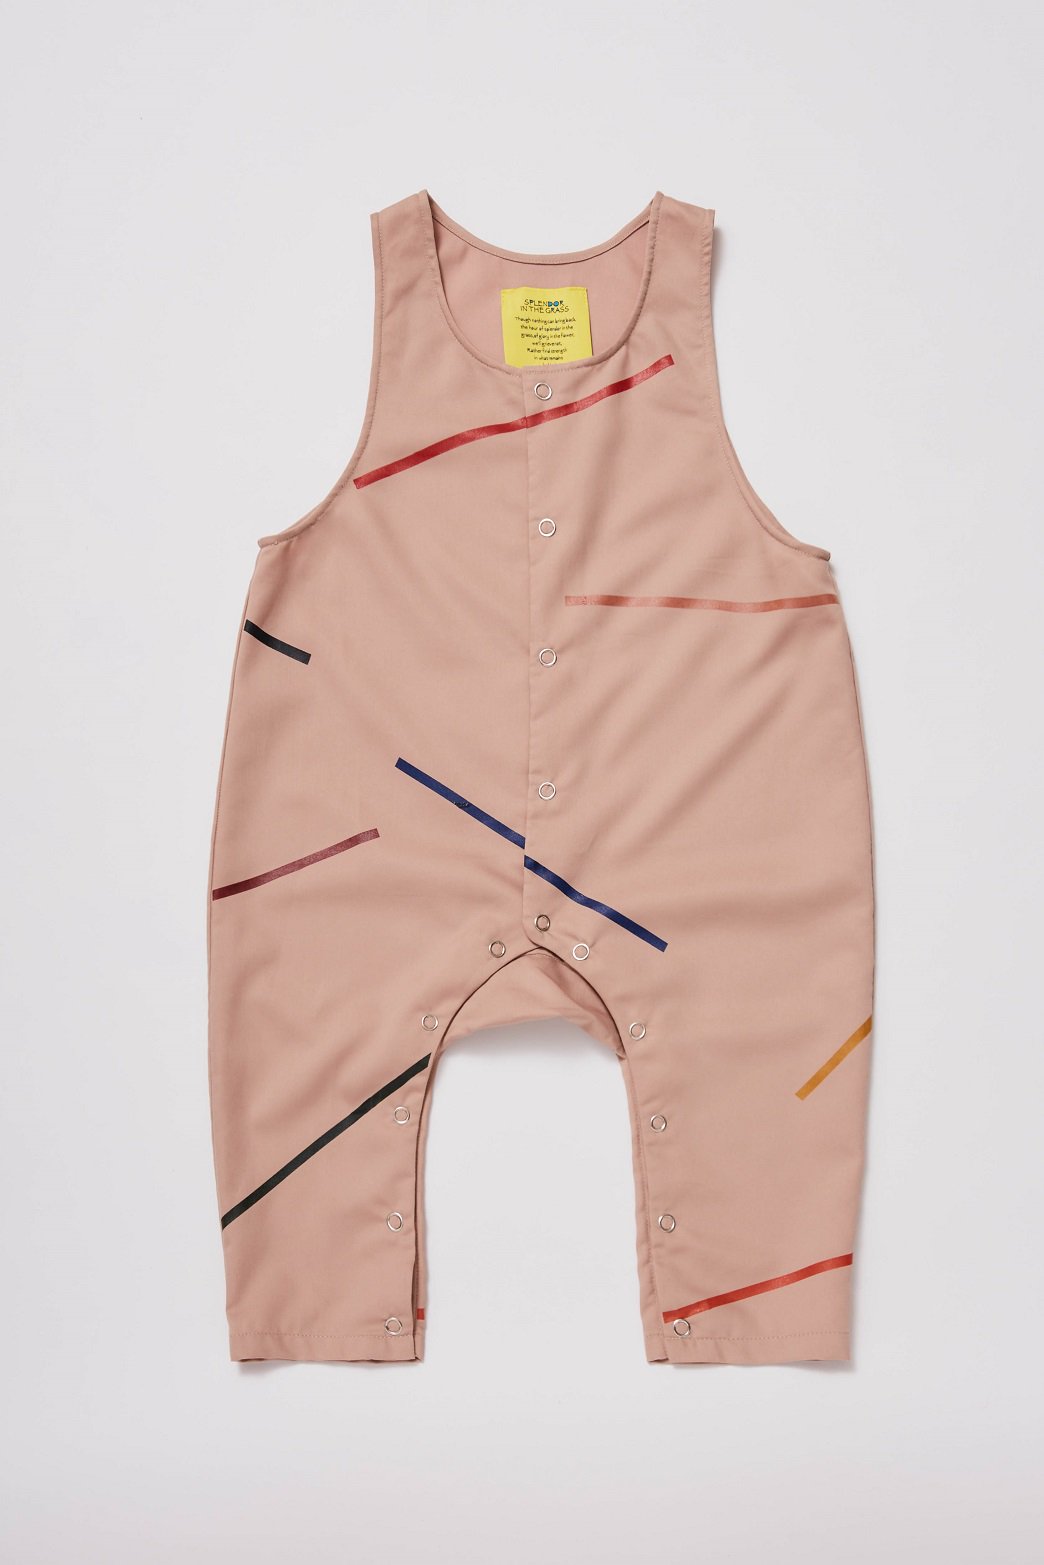 RETOUCH / baby jump suit - Romei